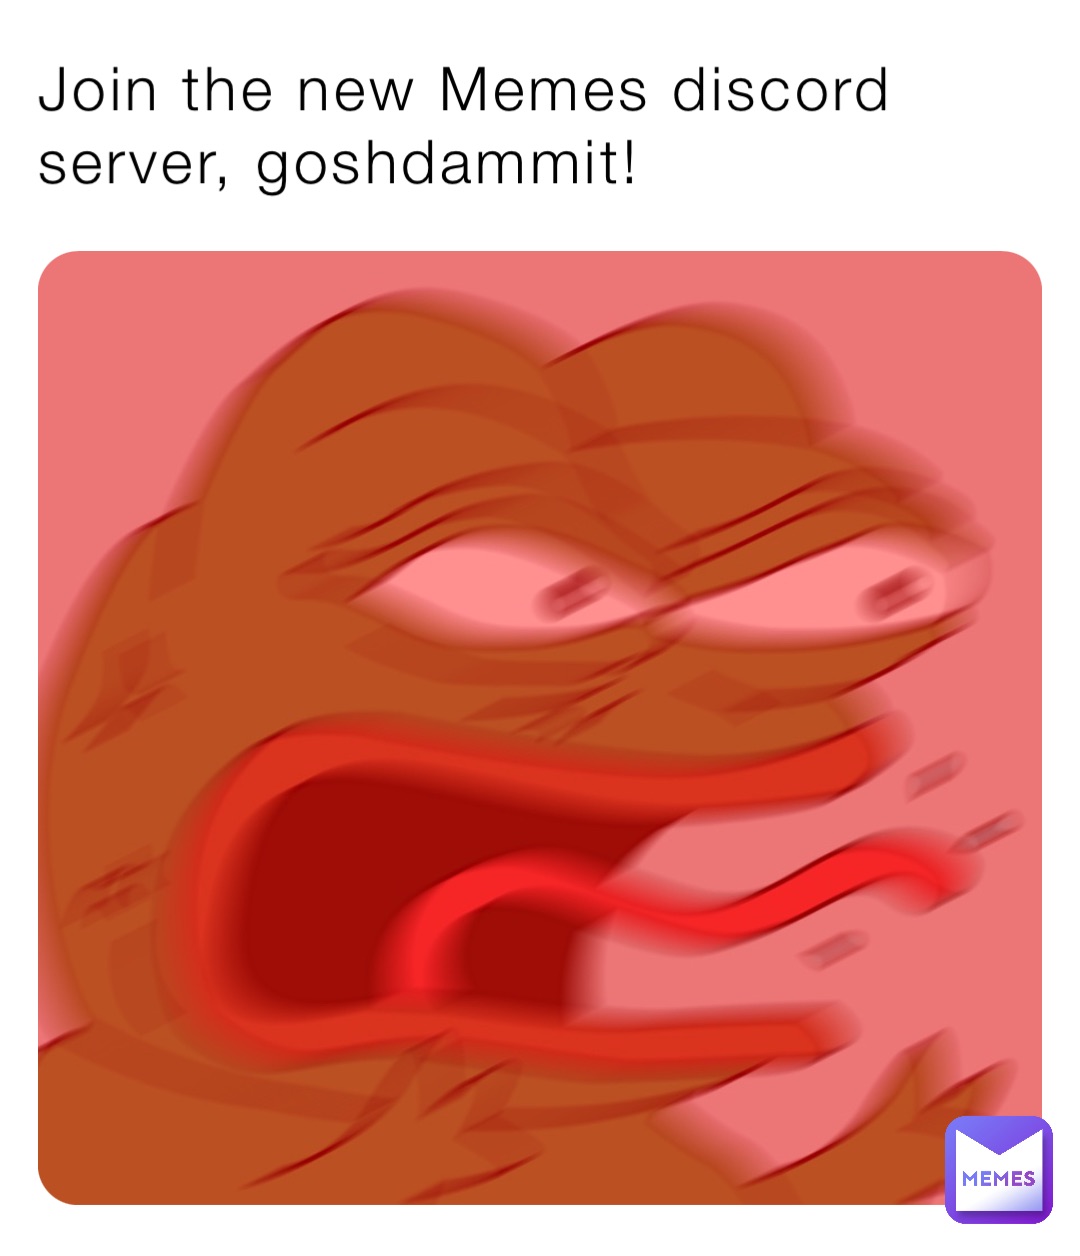 Join the new Memes discord server, goshdammit!